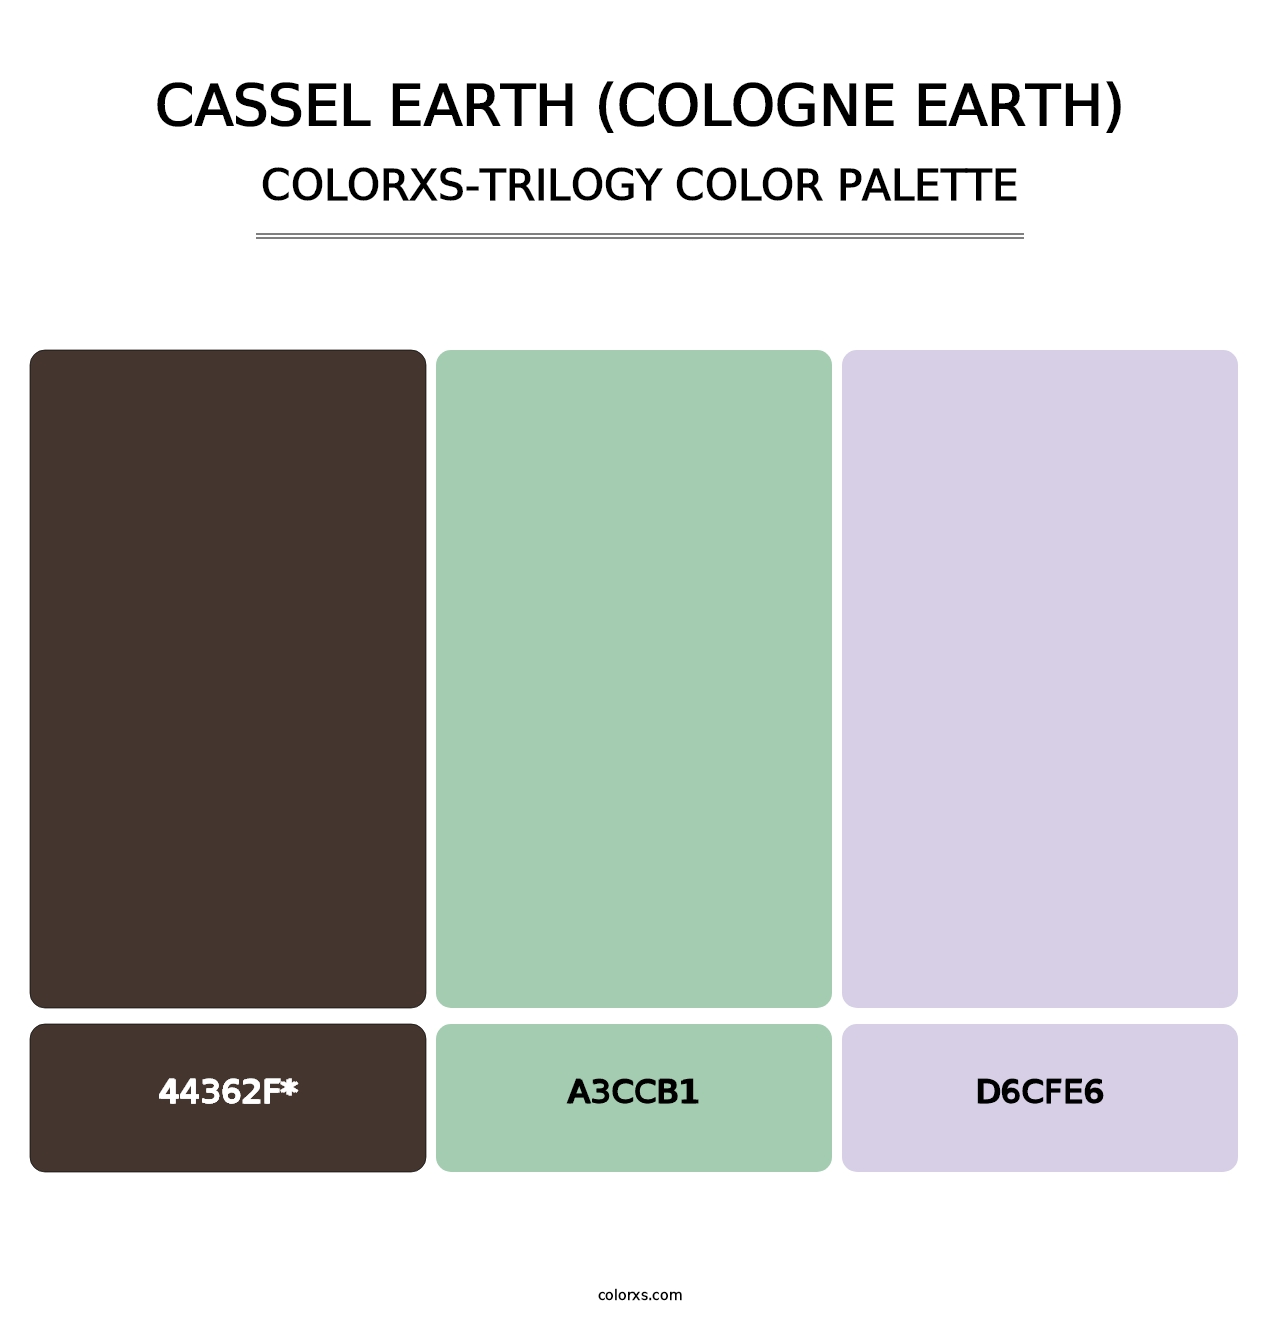 Cassel Earth (Cologne Earth) - Colorxs Trilogy Palette